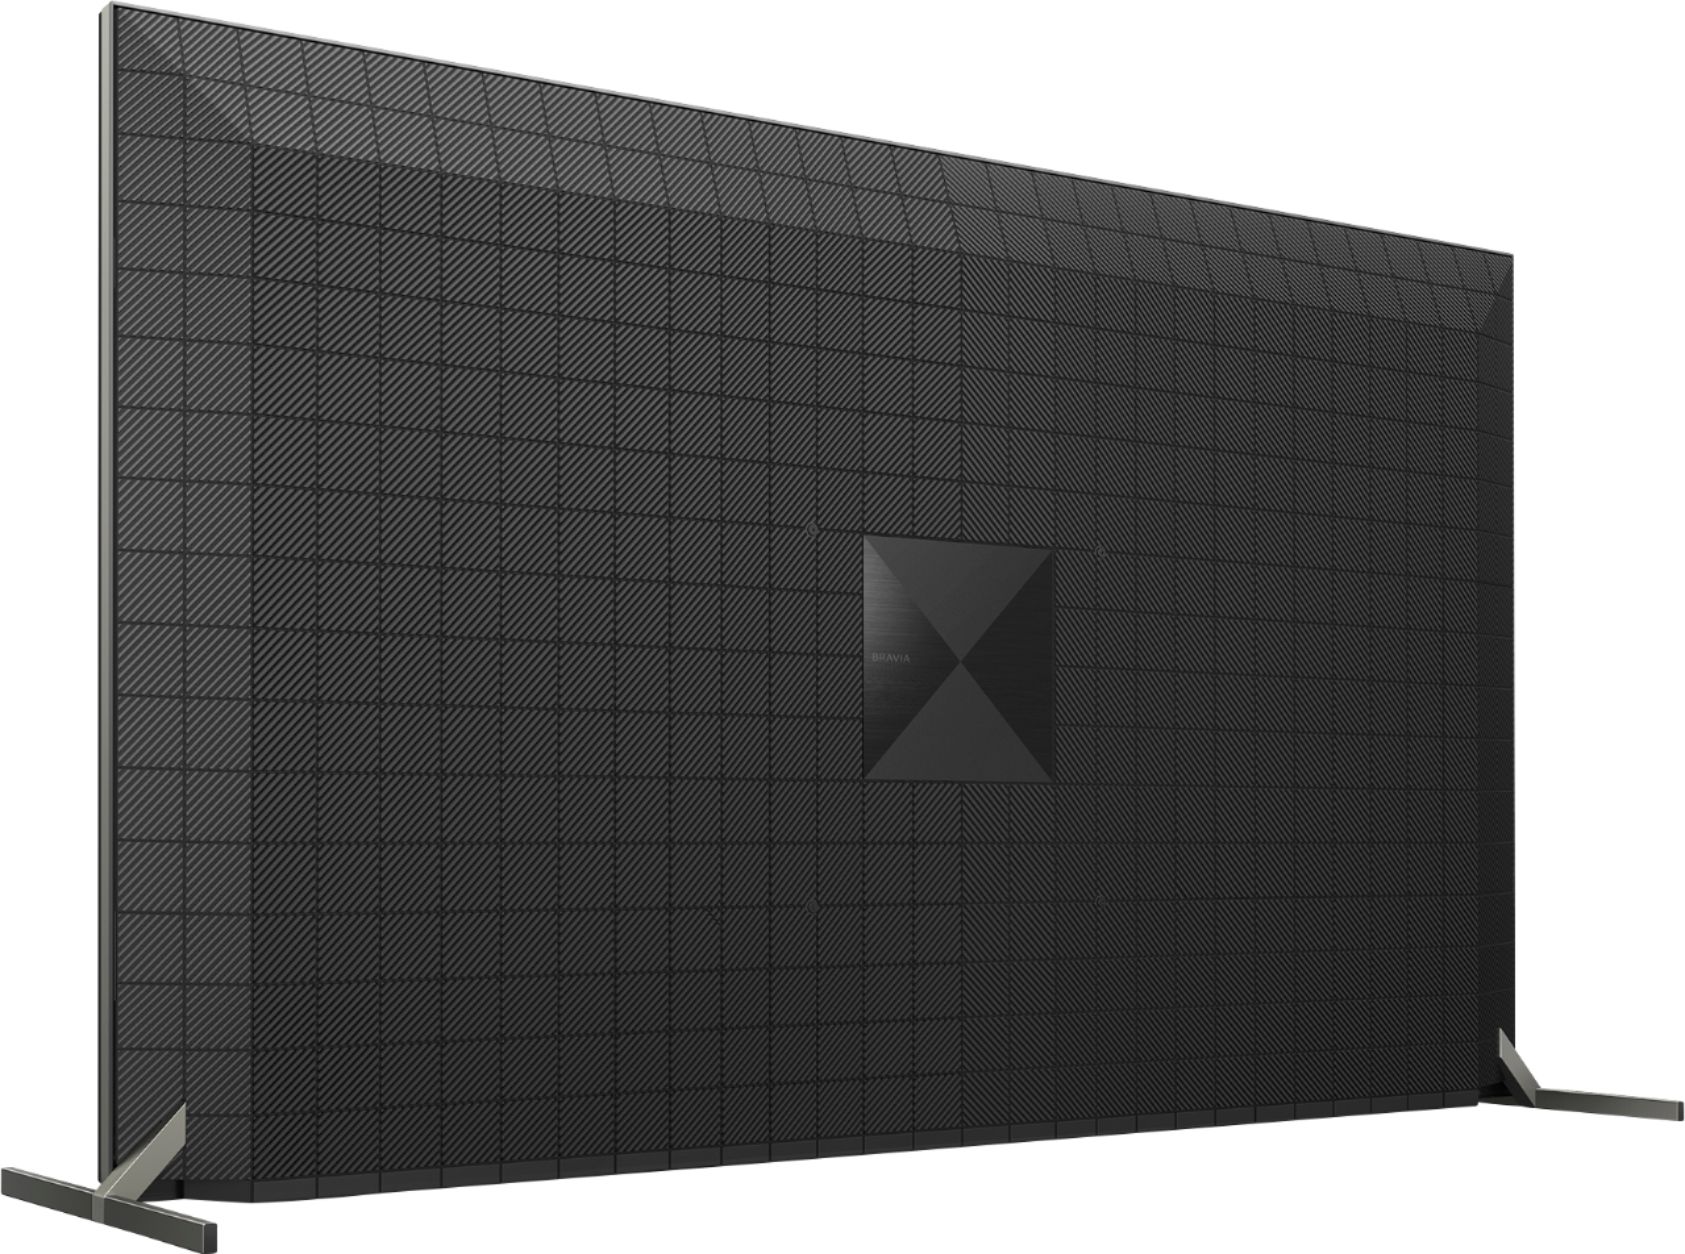 Angle View: Sony - 85" Class BRAVIA XR Z9J LED 8K UHD Smart Google TV